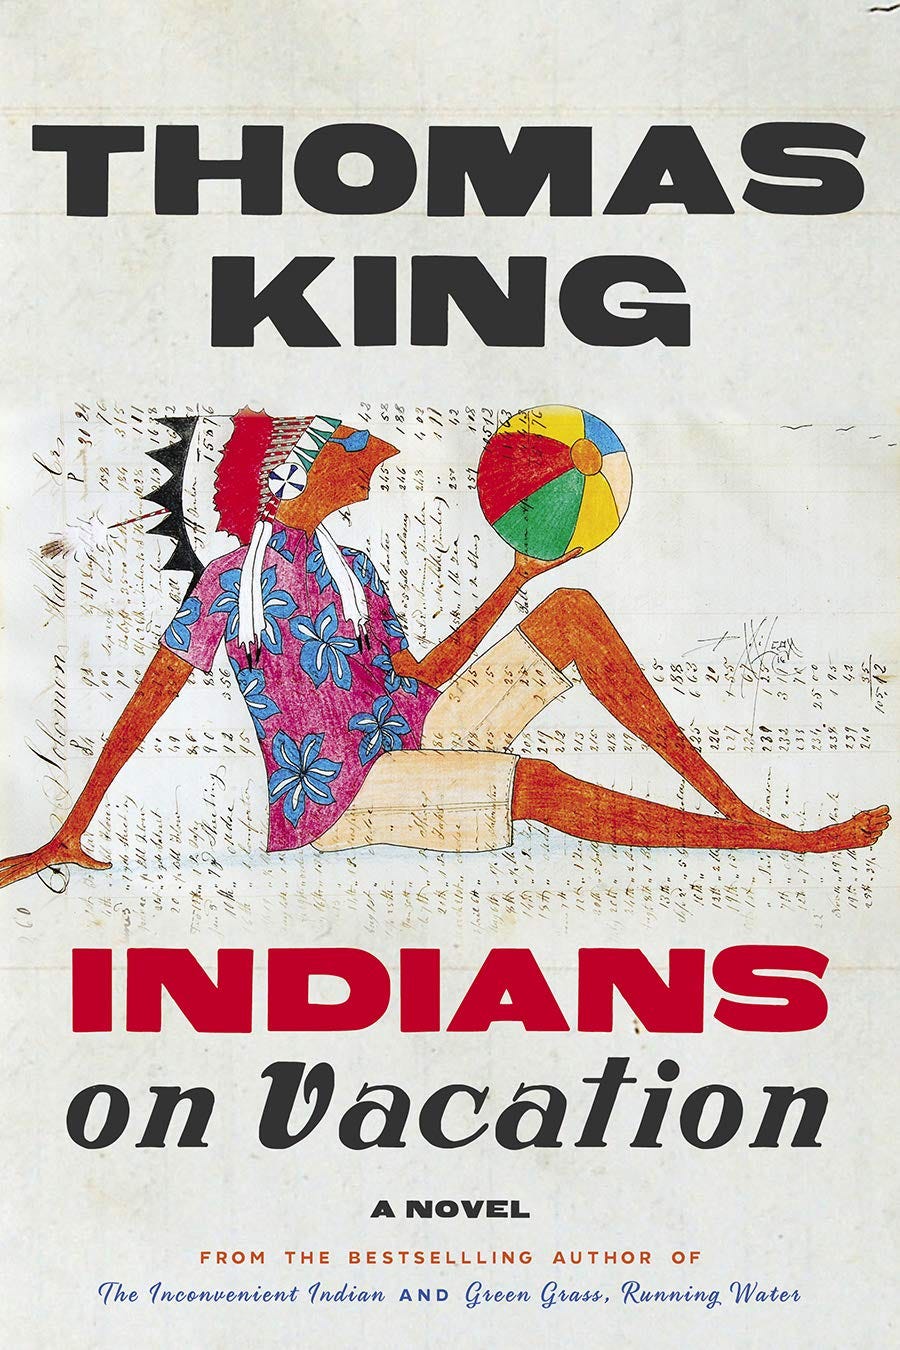 Amazon.com: Indians on Vacation: A Novel: 9781443460545: King, Thomas: Books